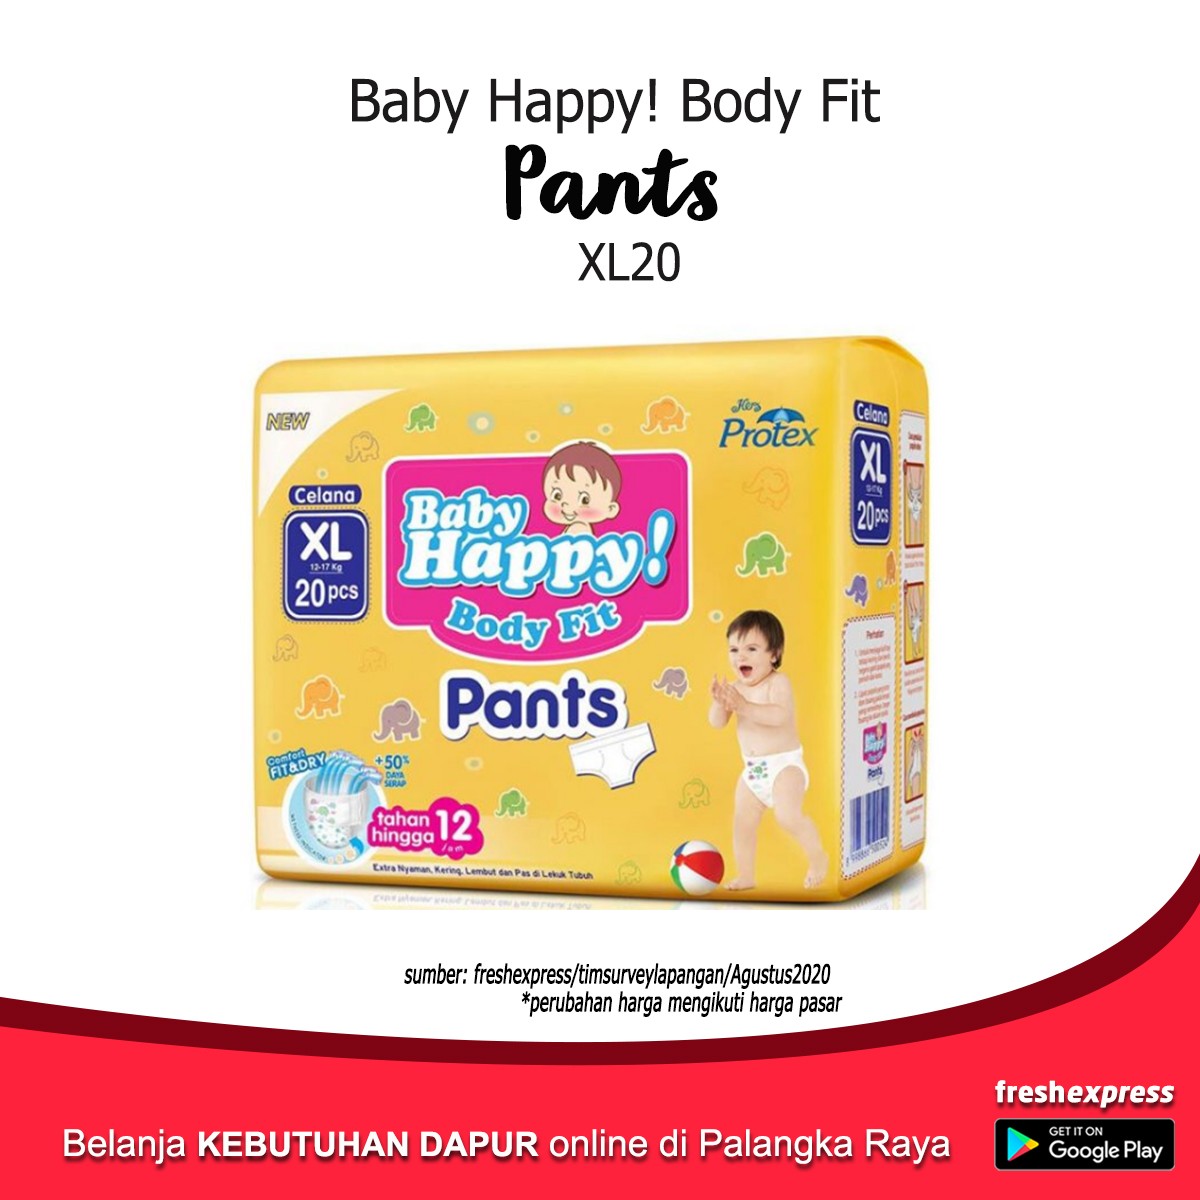 Baby Happy Body Fit Pants XL20